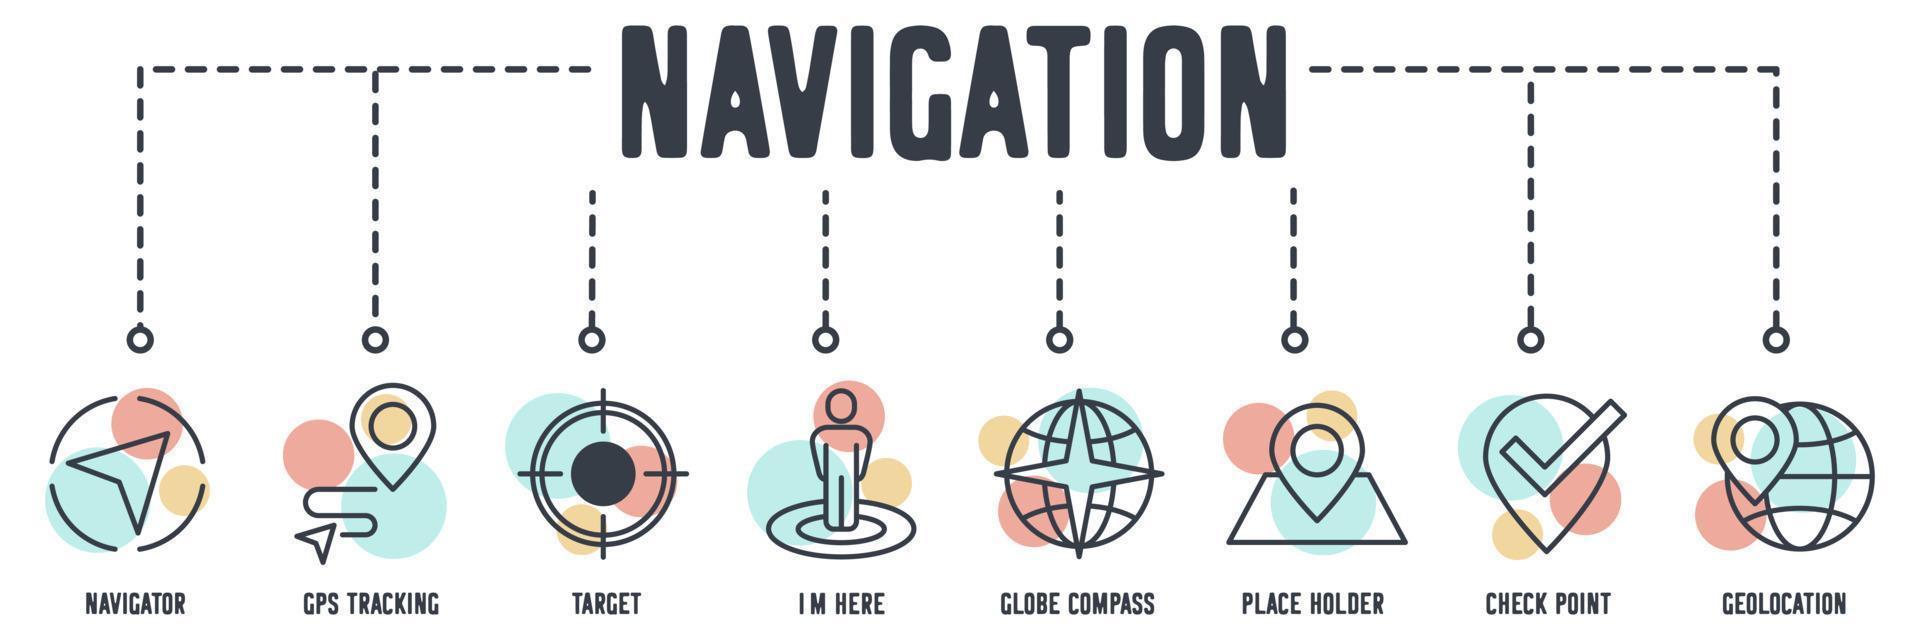 Kartenstandort und Navigationsbanner-Websymbol. navigator, gps-verfolgung, ziel, ich bin hier, globuskompass, platzhalter, kontrollpunkt, geolocation-vektorillustrationskonzept. vektor